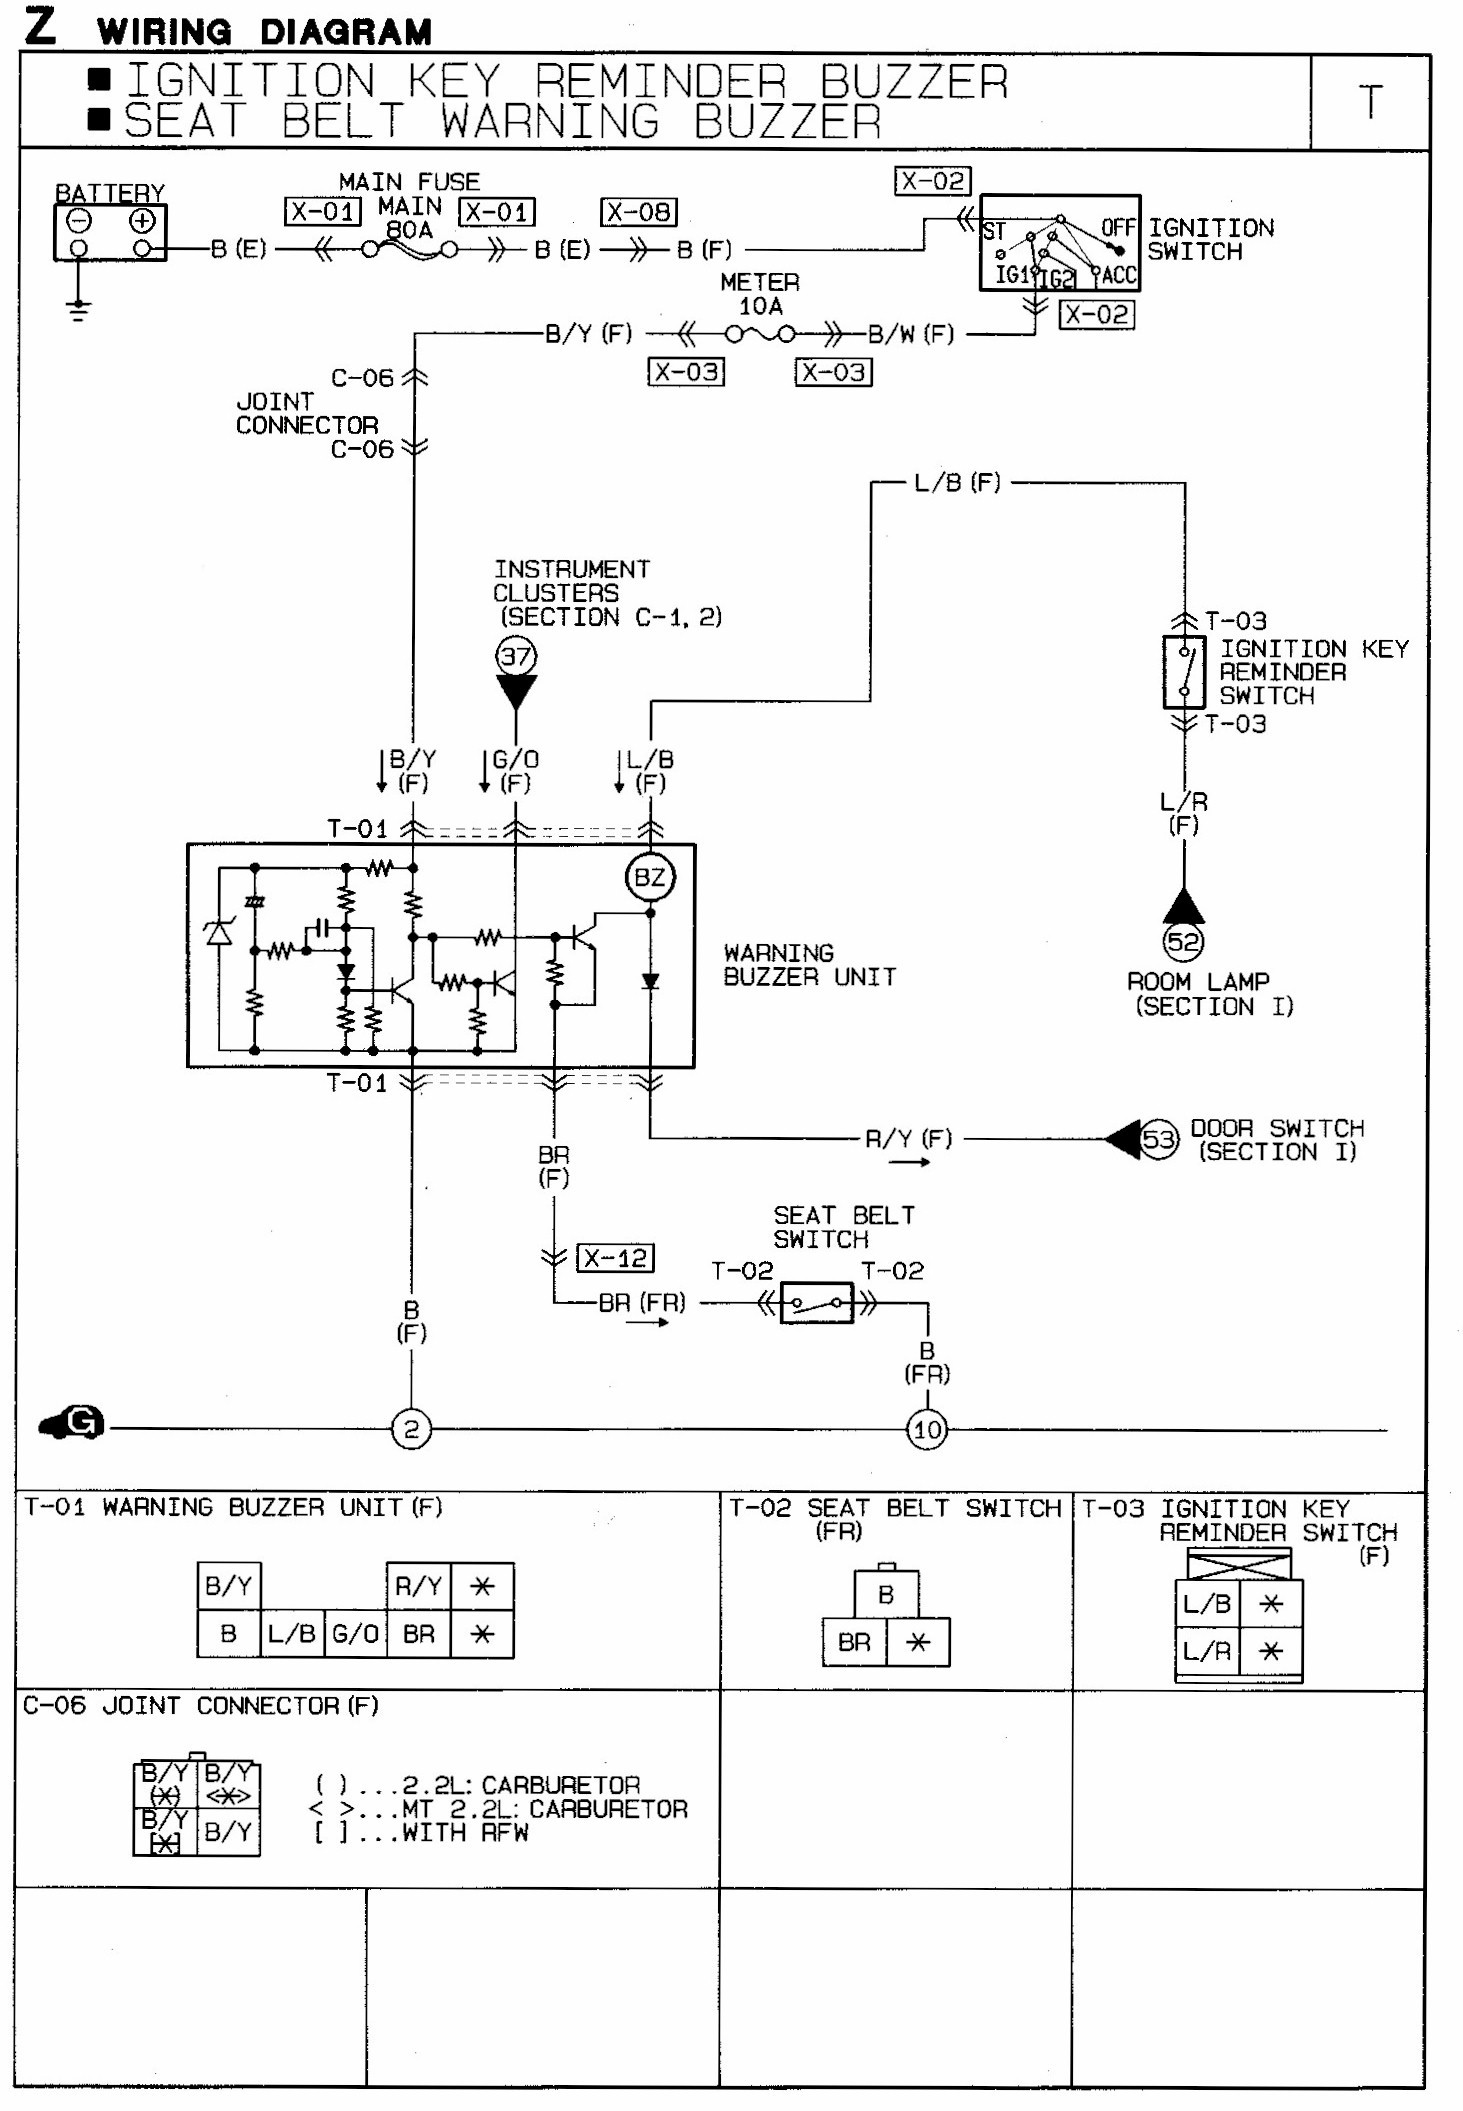 Kohler Engine Ignition Wiring Diagram Key Wiring Diagram Wiring Diagram Of Kohler Engine Ignition Wiring Diagram